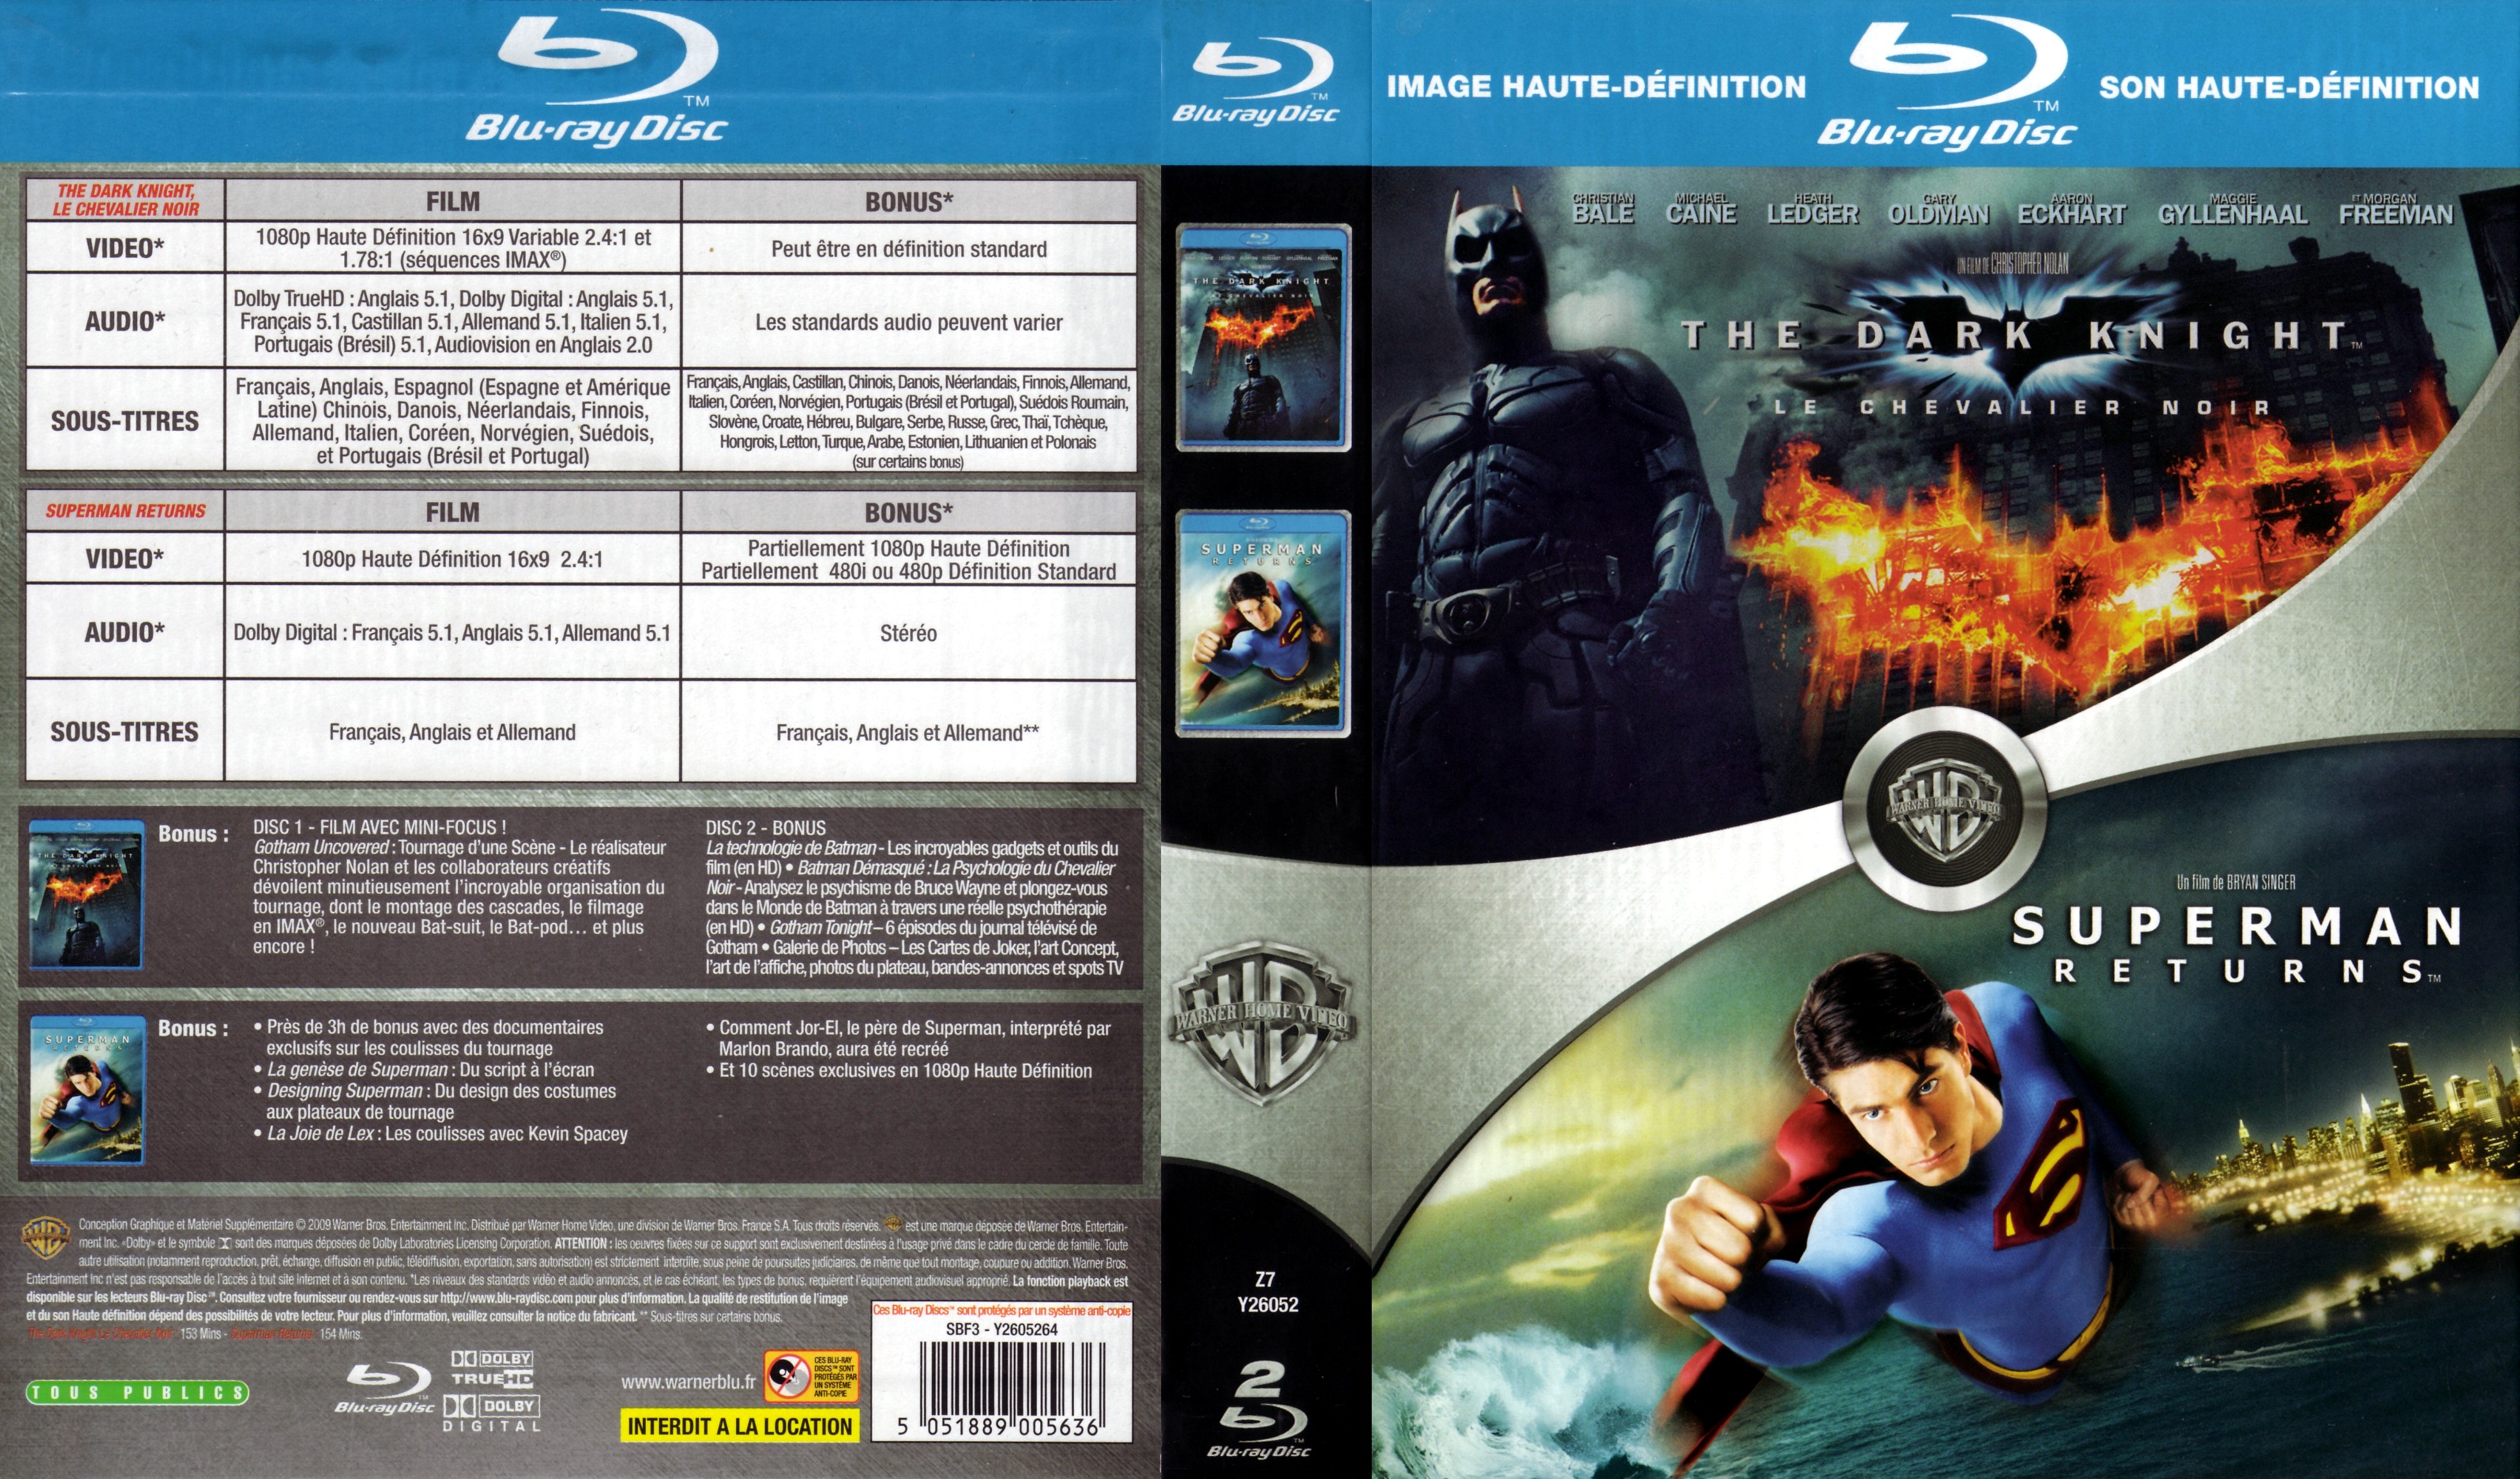 Jaquette DVD The dark knight le chevalier noir + Superman returns (BLU-RAY)